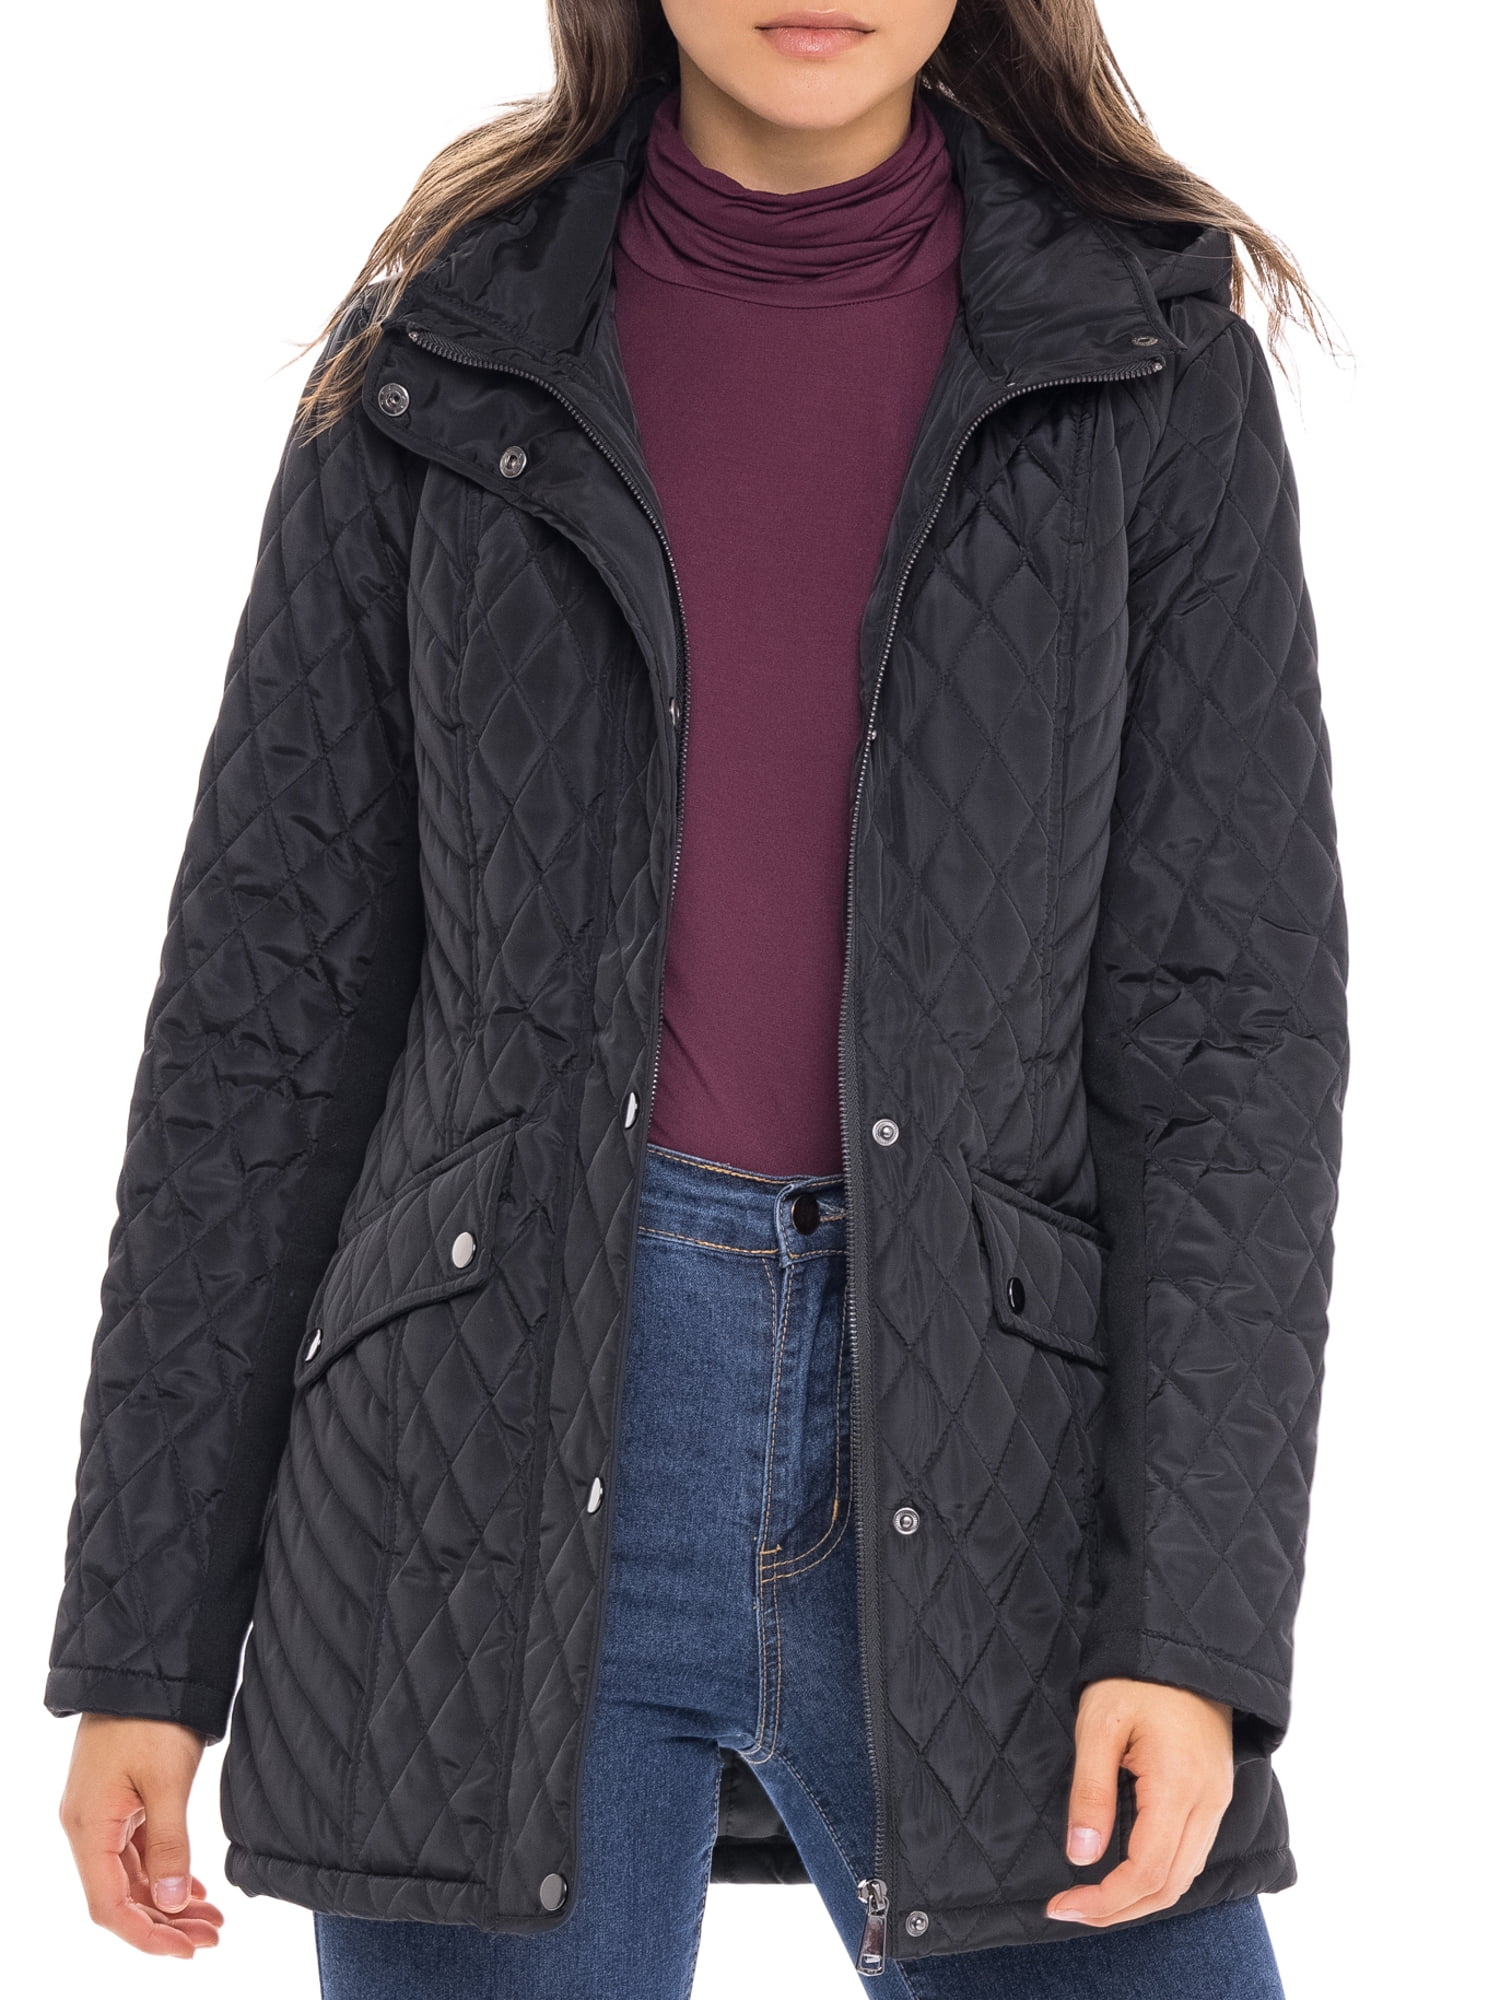 ONTBYB Women Warm Solid Metallic Color Hoodie Puffer Down Jacket Outwear